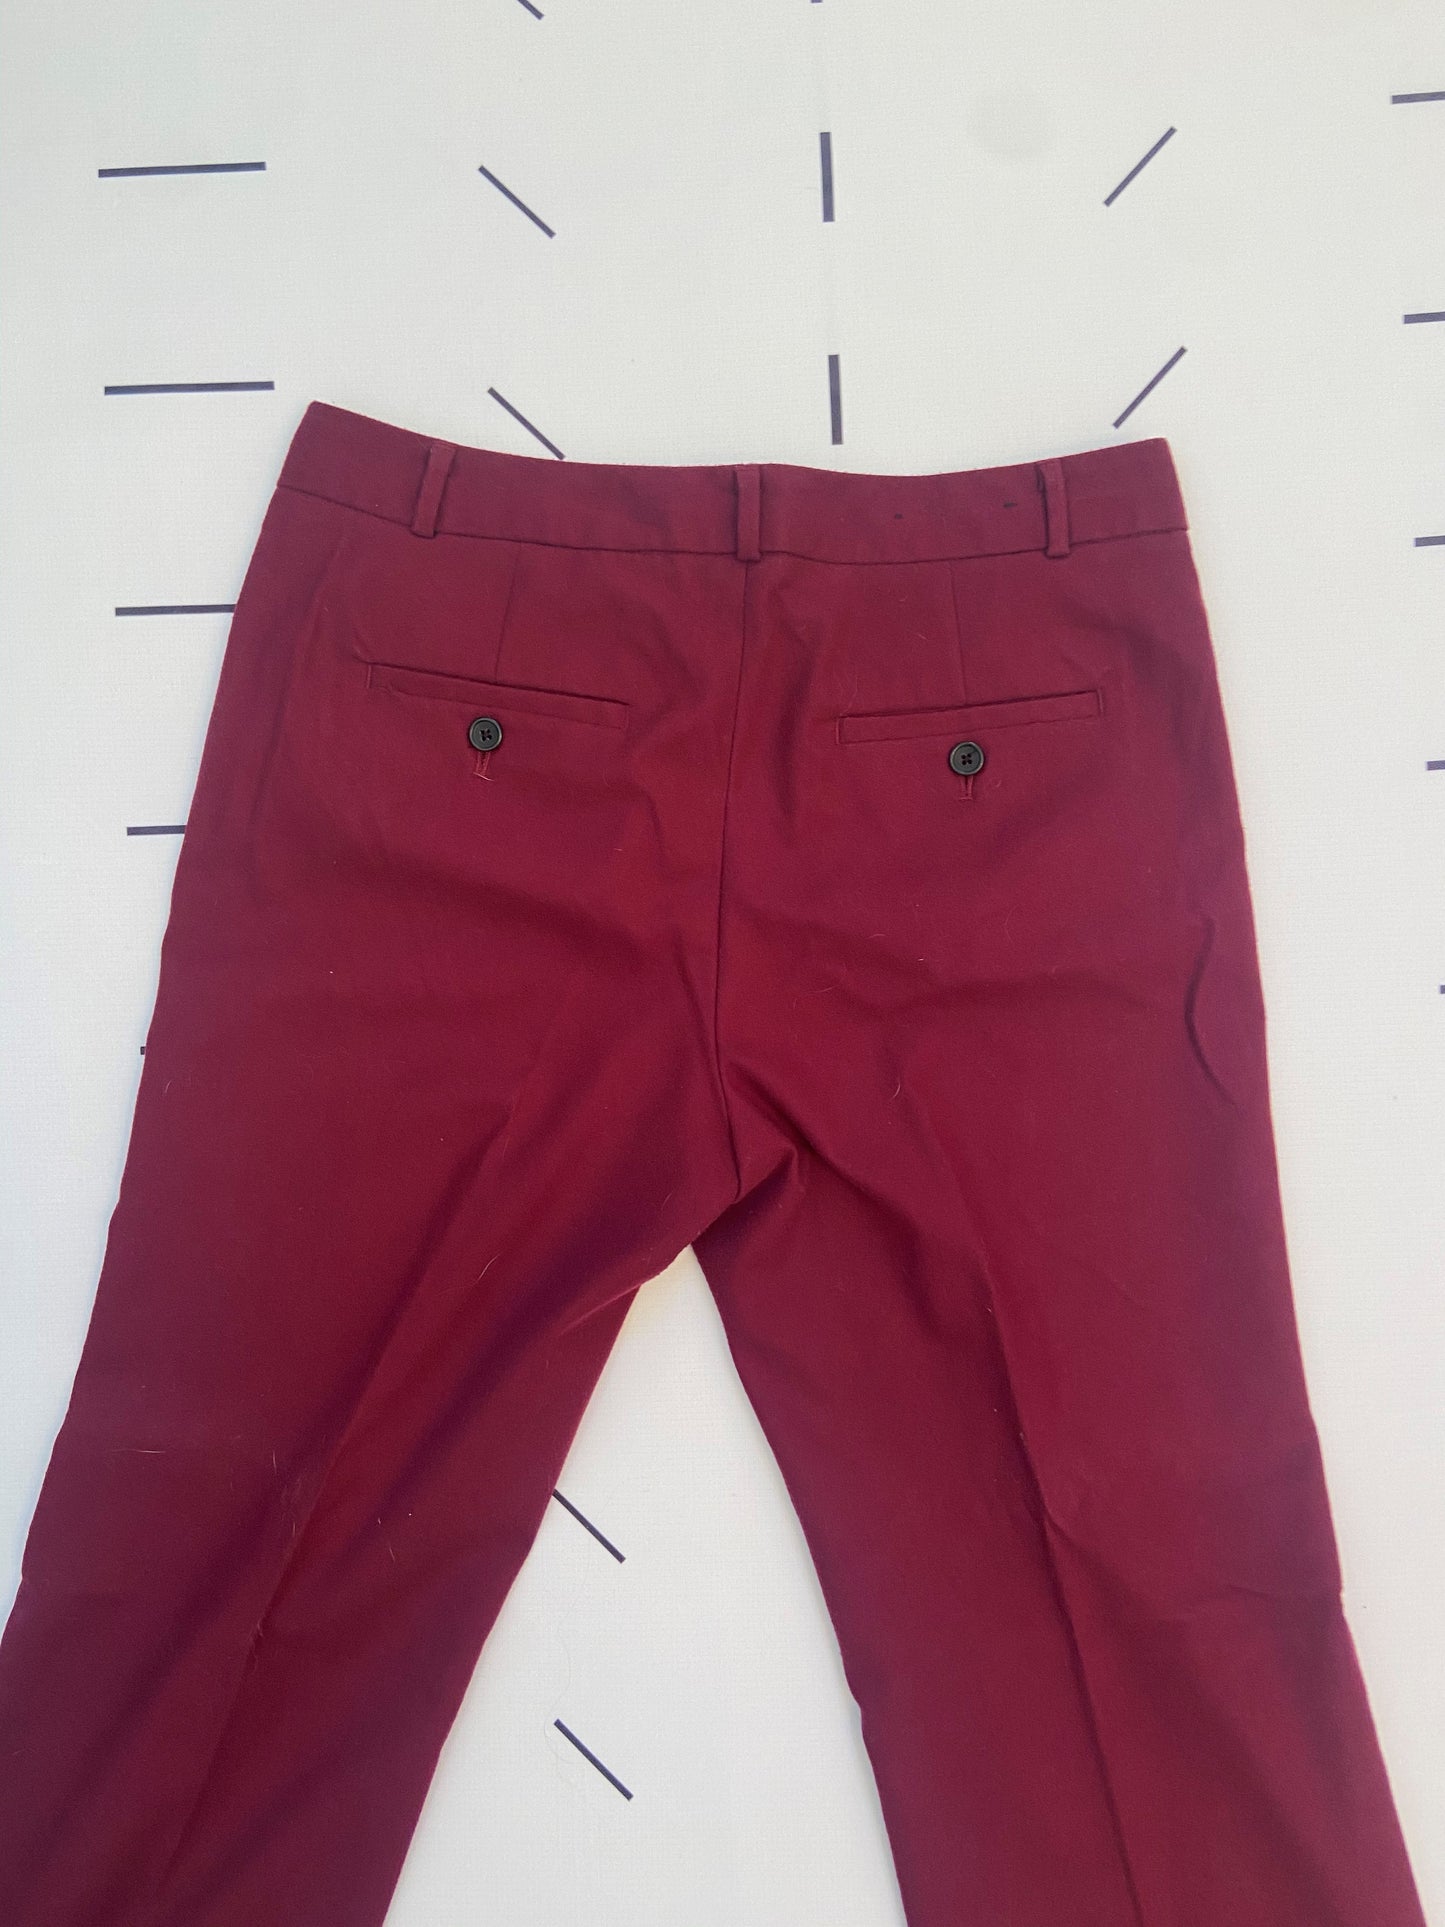 Maroon Boot Cut Dress Pants - S (6)